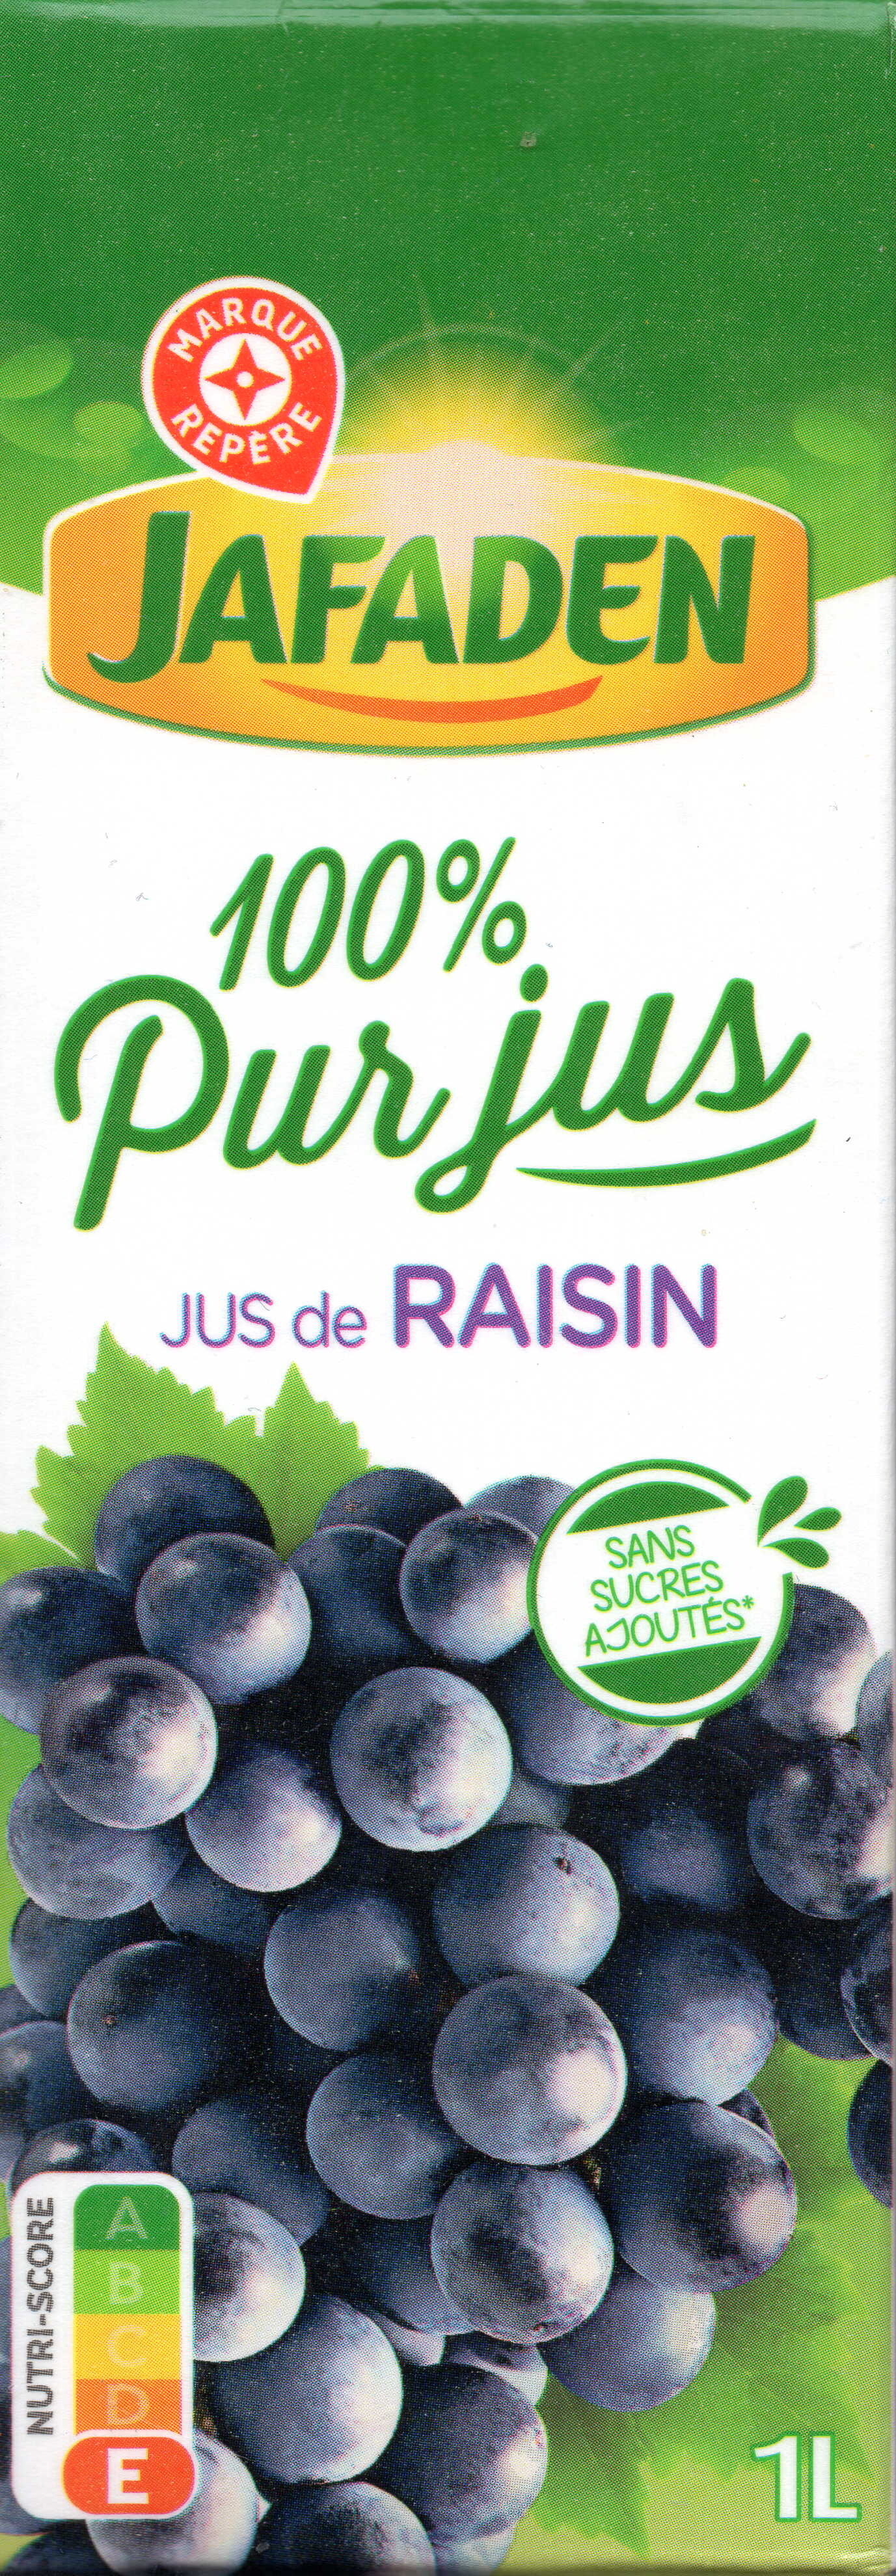 Pur jus de raisin - Product - fr